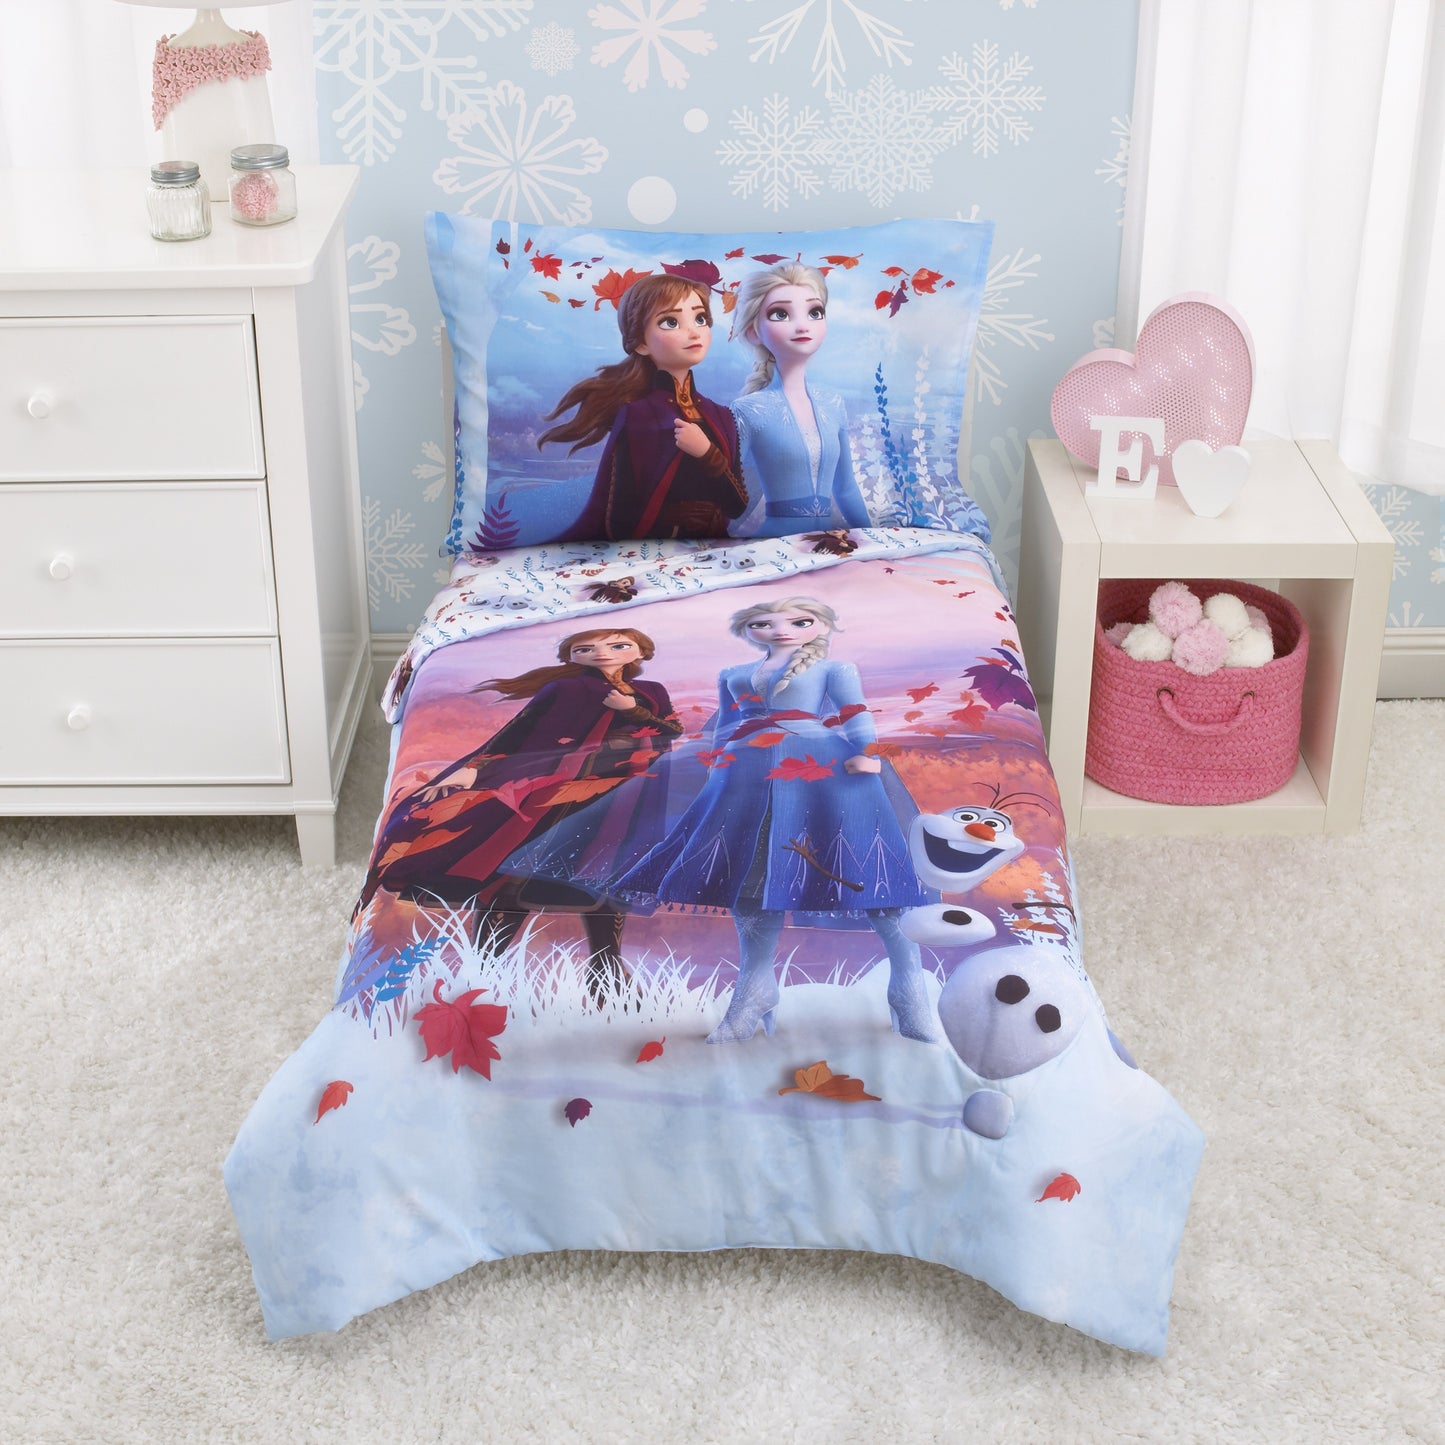 Disney Frozen 2 - Magical Journey - Light Blue, Lavender, Teal and White Super Soft Toddler Blanket